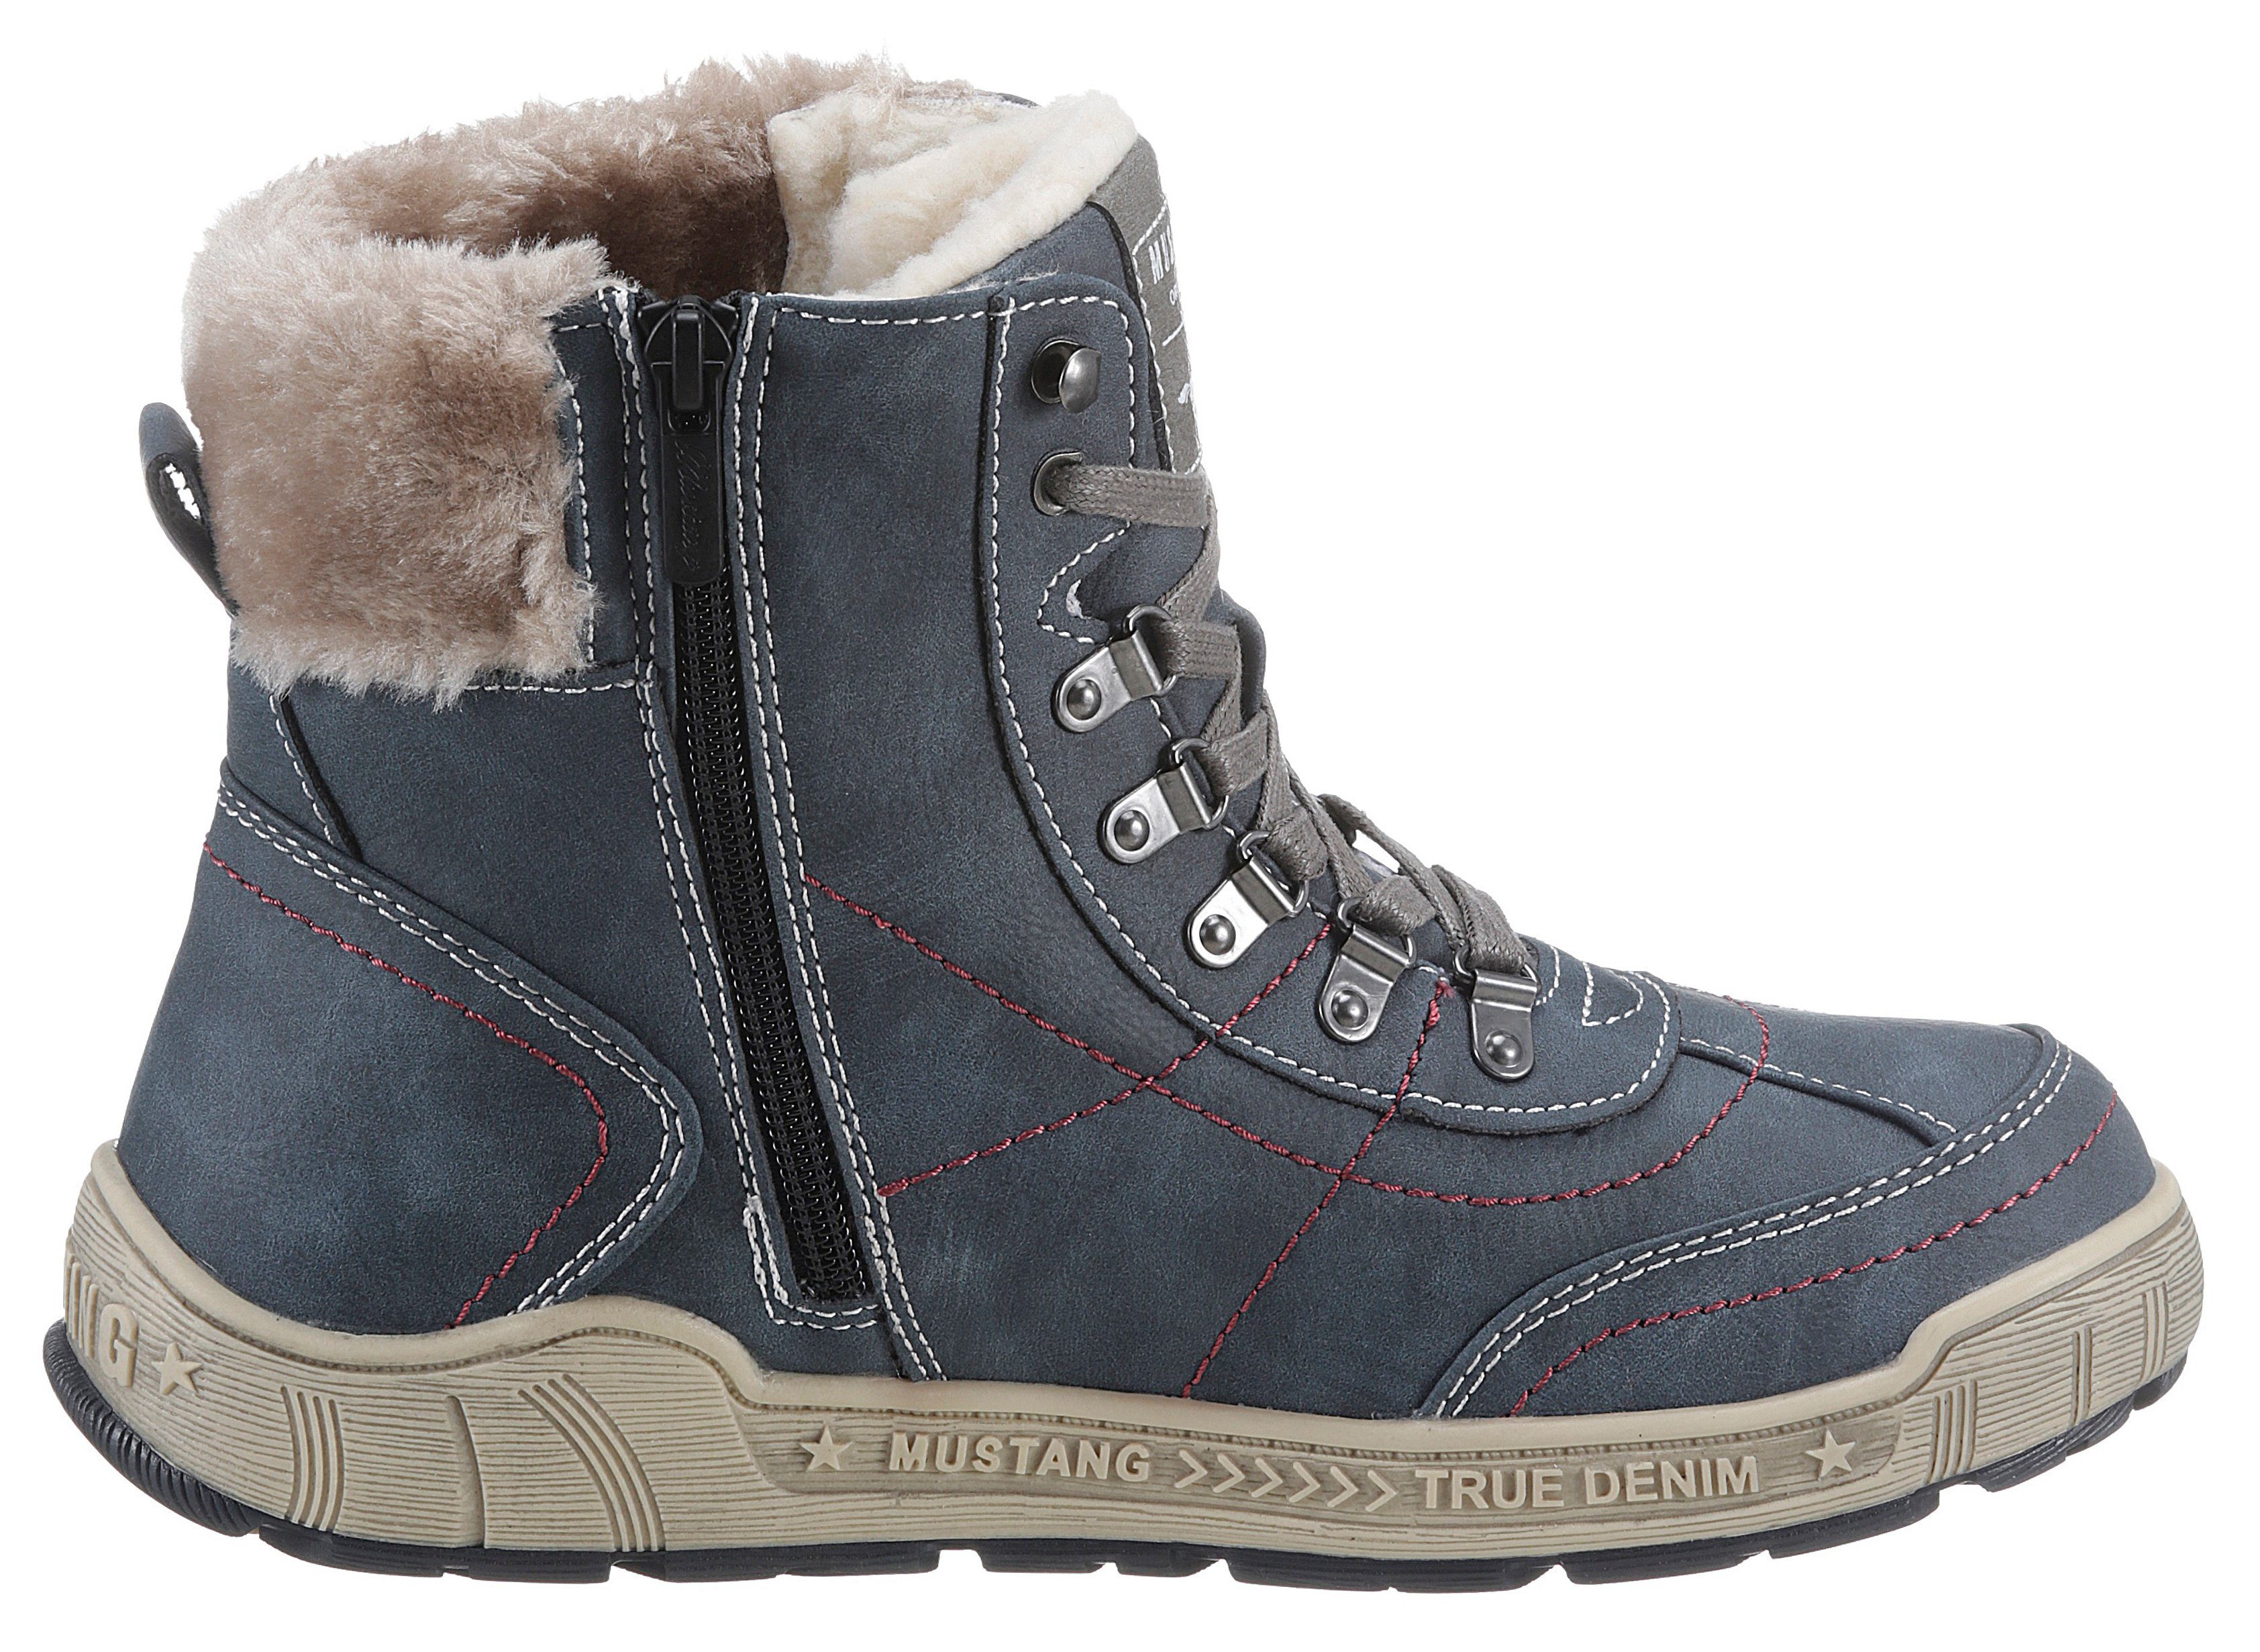 Kunstfellkragen in Shoes mit Weite Winterboots = Mustang G weit blau-used